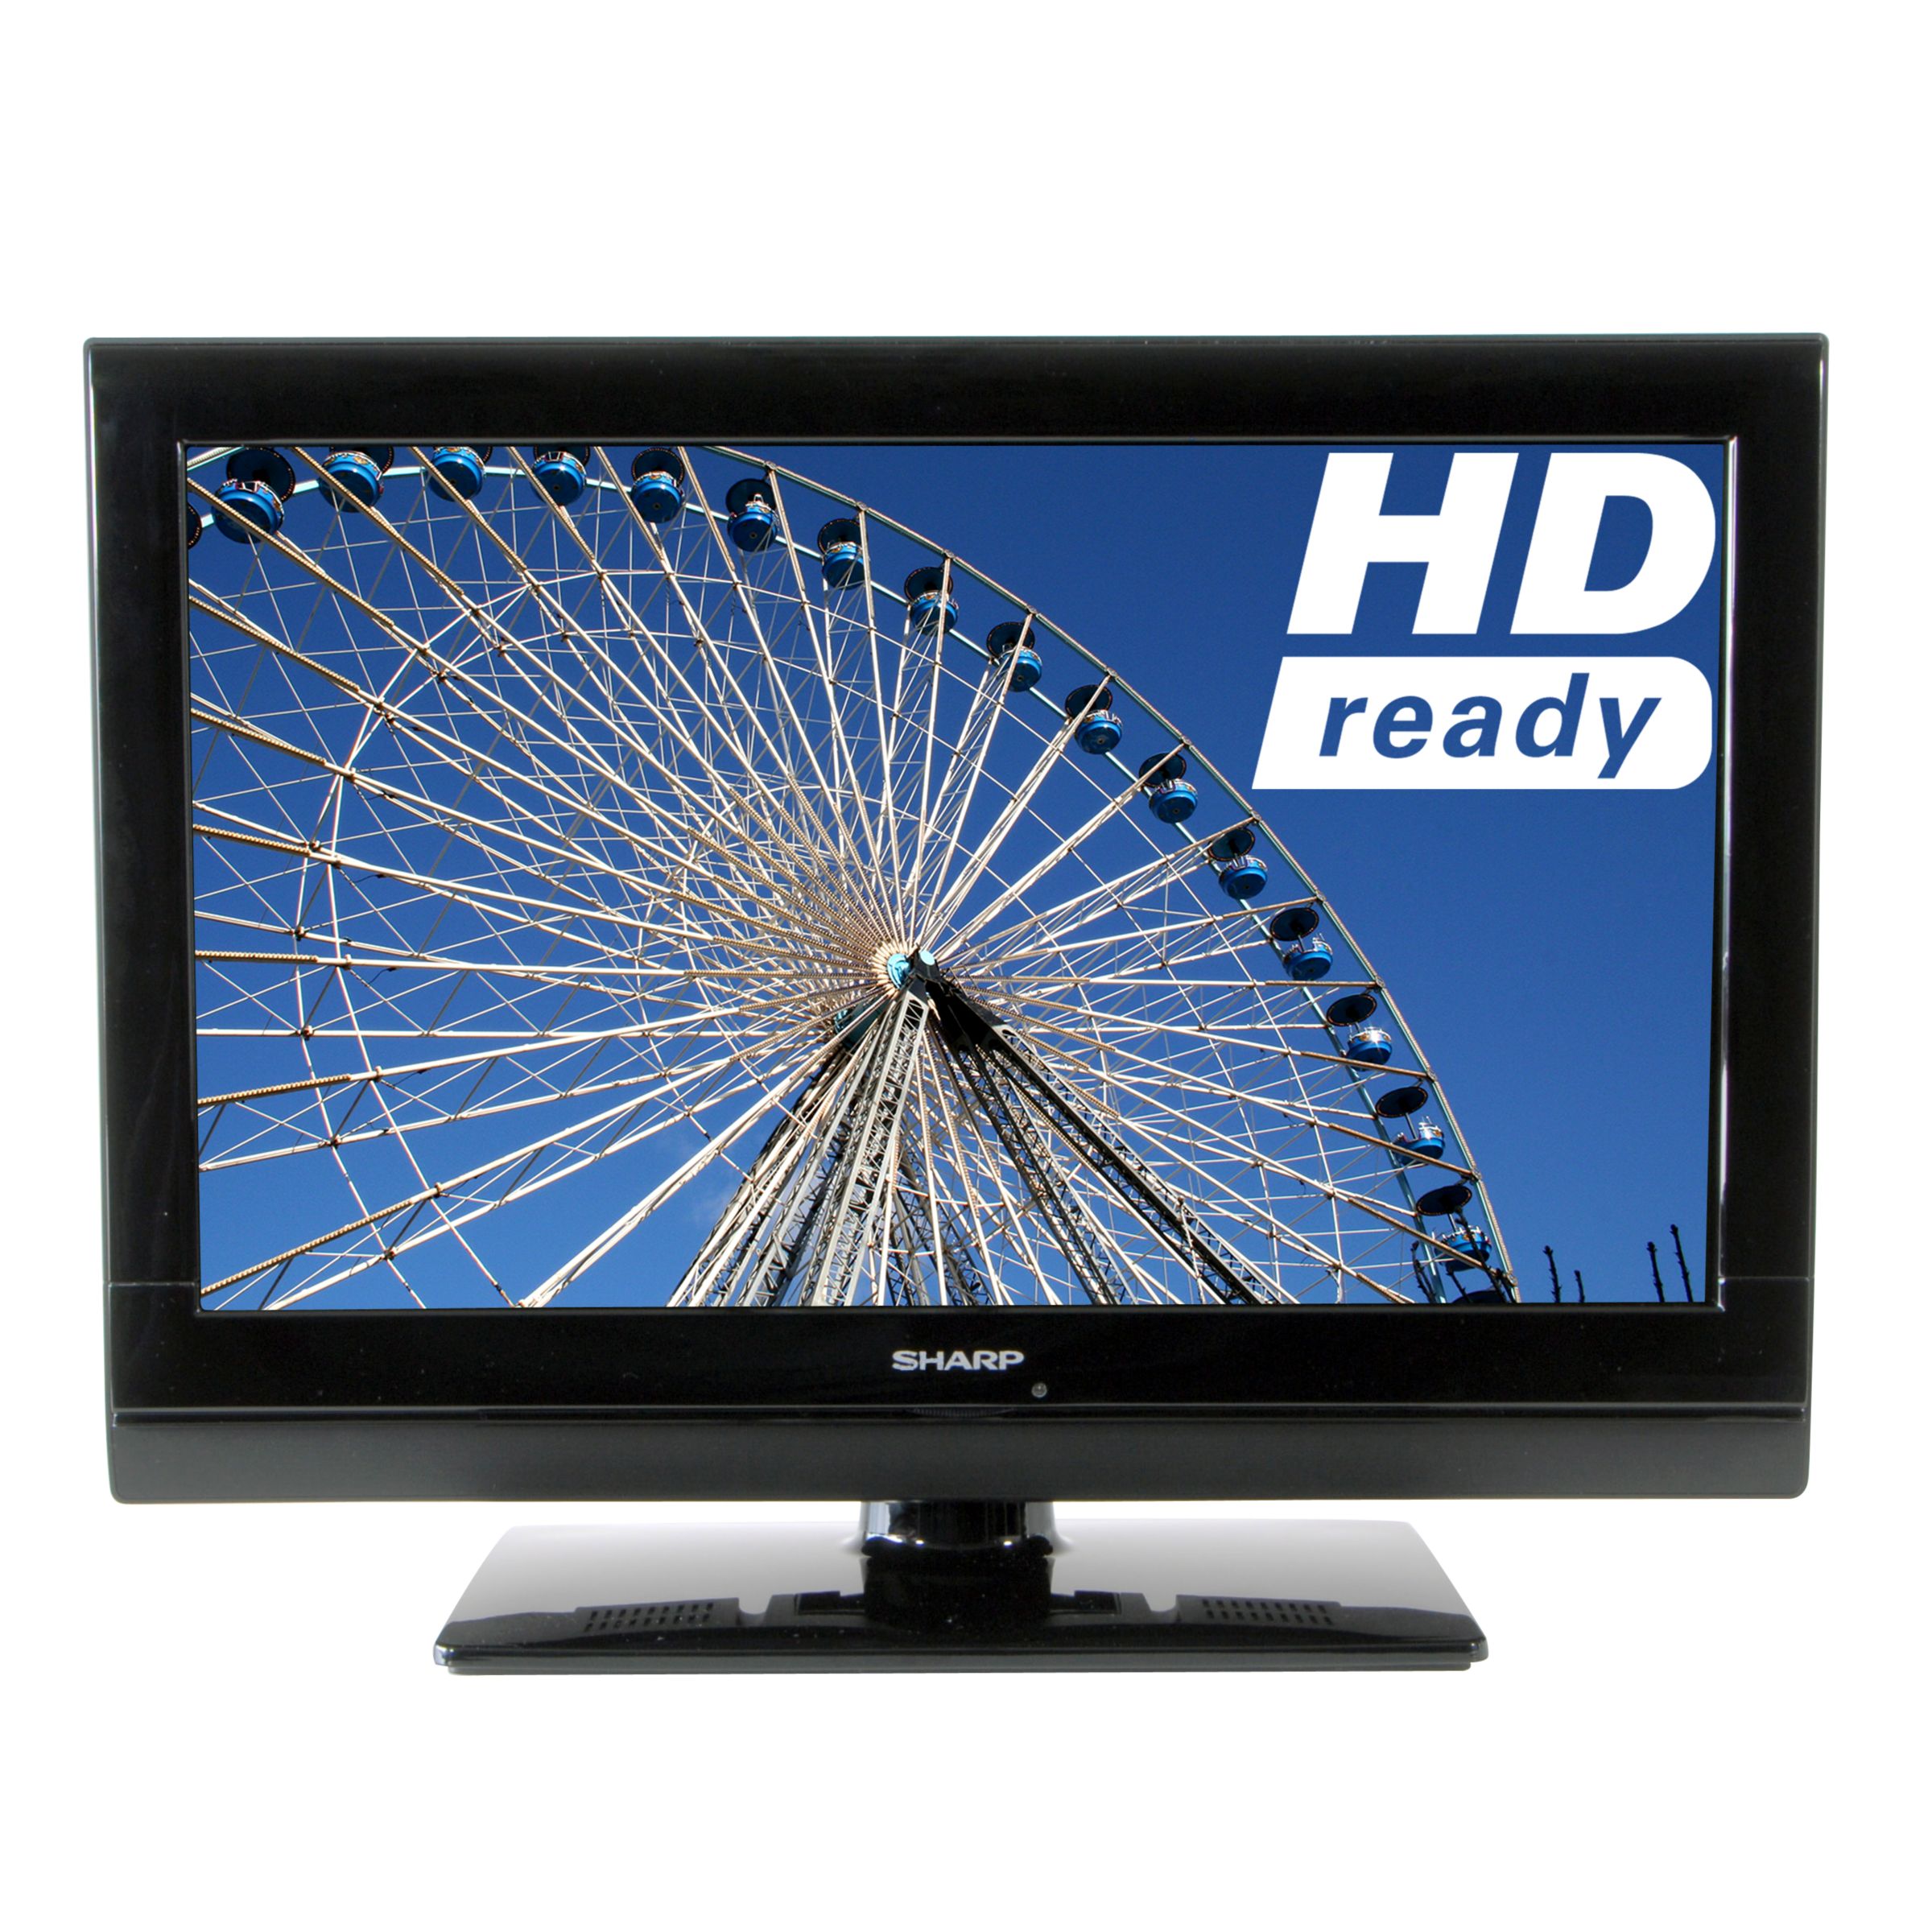 Sharp Aquos LC26SH7EBK LCD HD Ready Digital Television, 26 Inch at John Lewis